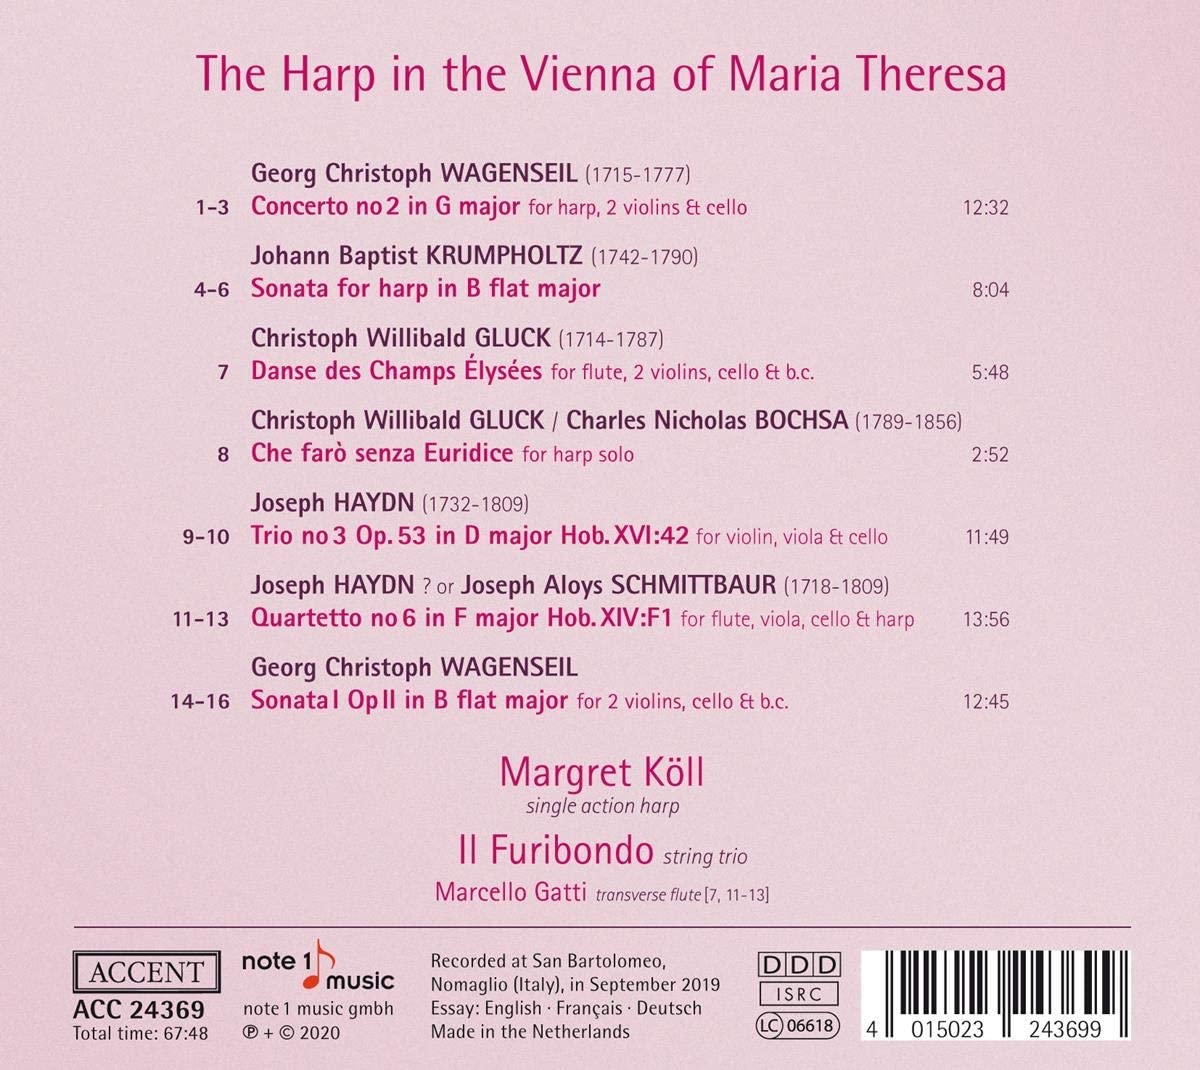 Margret Koll 마리아 테레지아 여제 시대 빈의 하프 음악 (The Harp in Vienna of Maria Theresa)